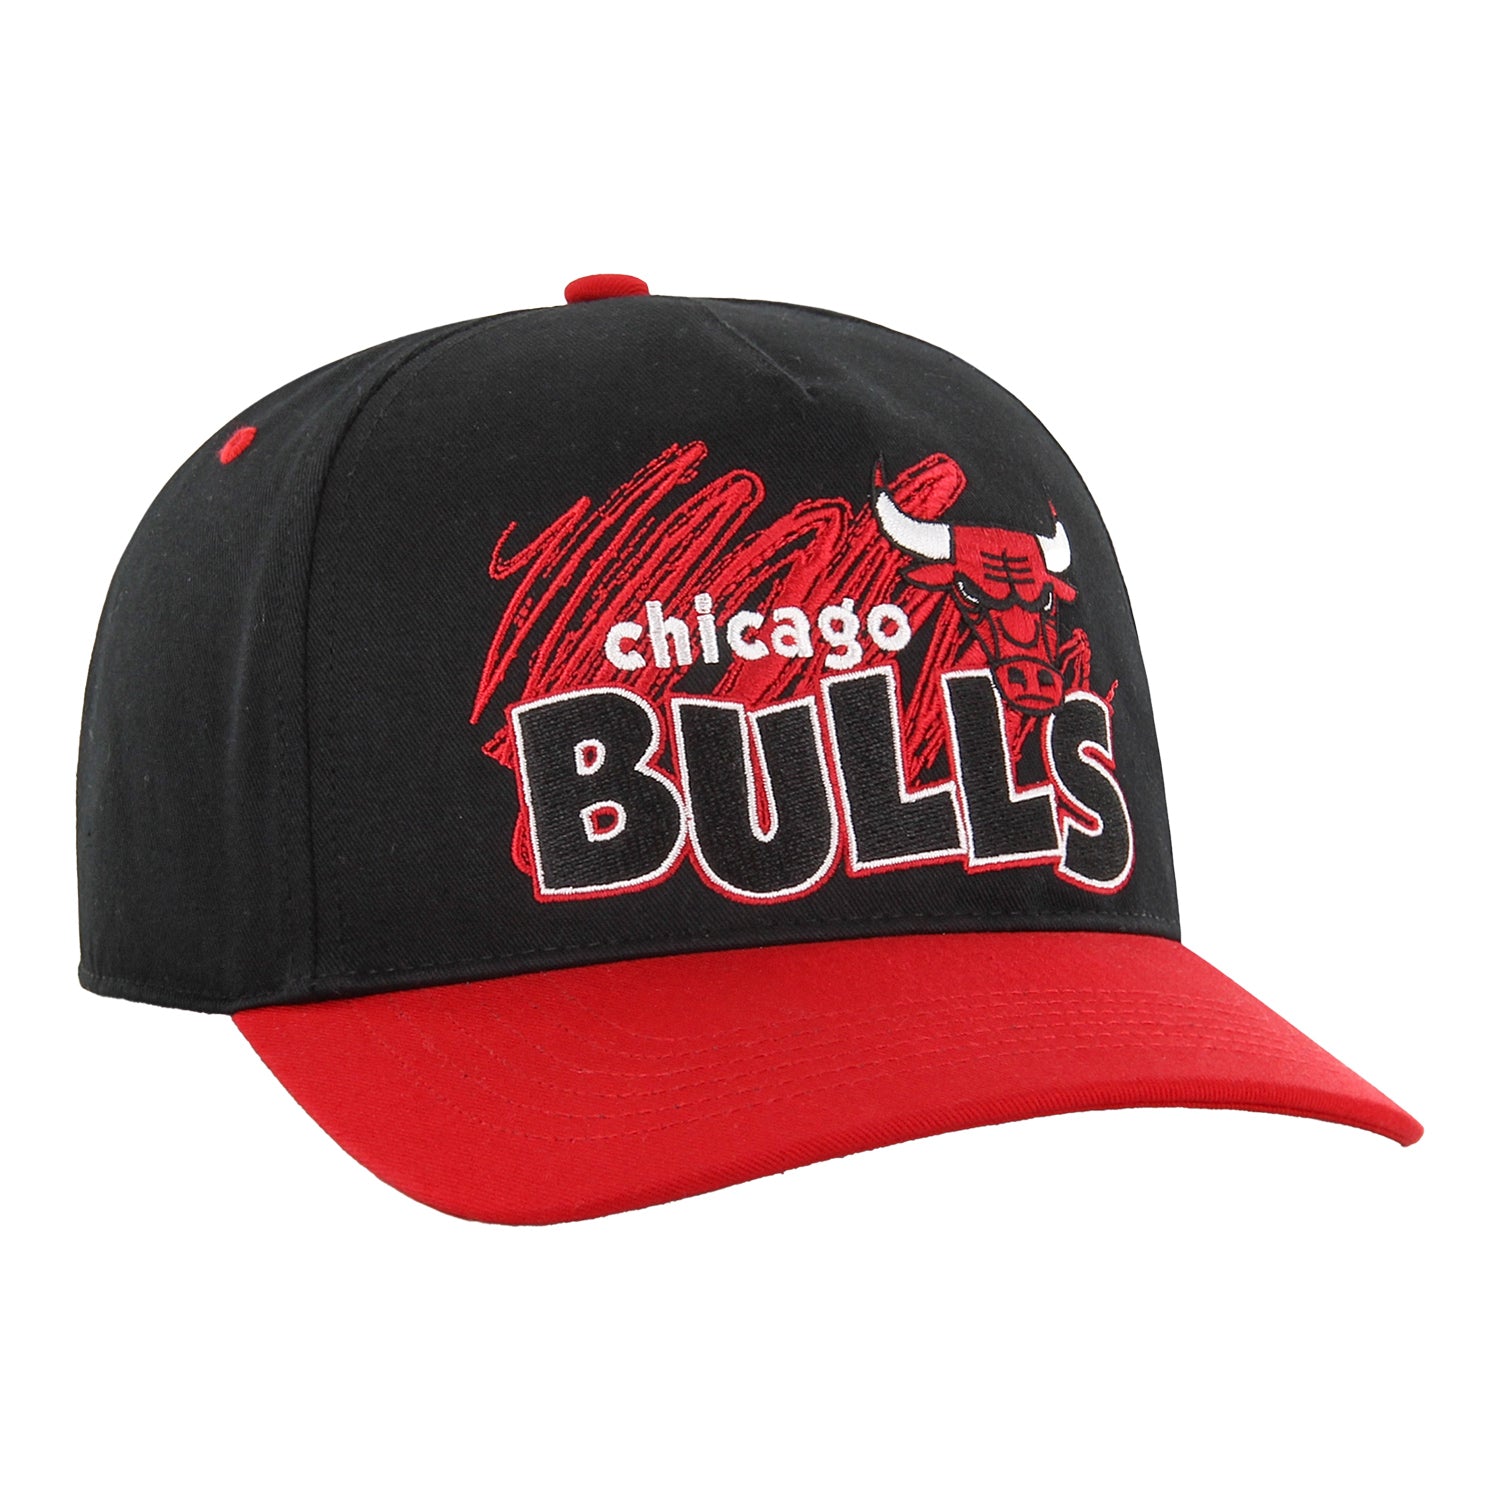 47 Brand Bulls Hitch Snapback Hat - Men's